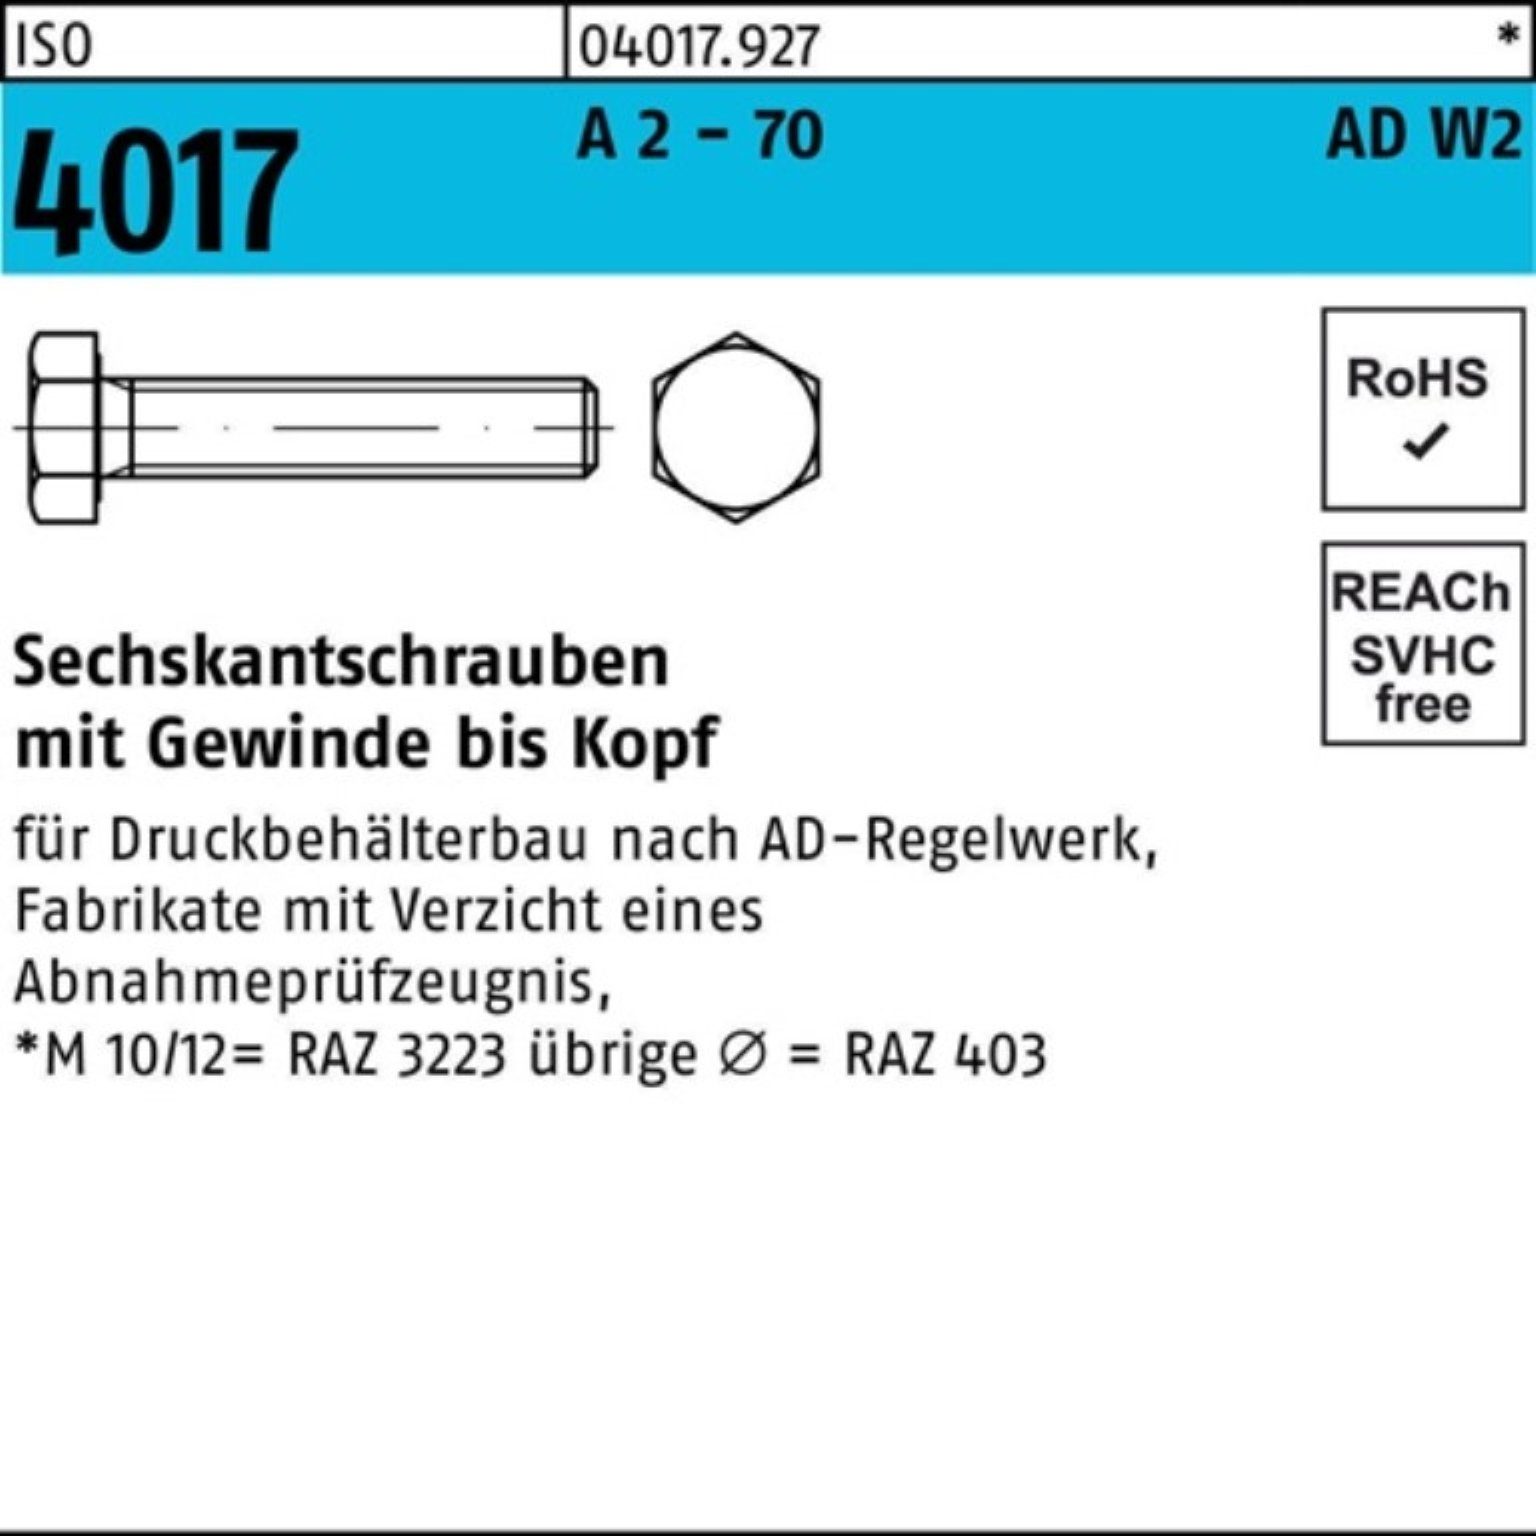 VG AD-W2 Sechskantschraube A Bufab 100 ISO 30 Pack 2 M10x 100er 70 Sechskantschraube St 4017 -